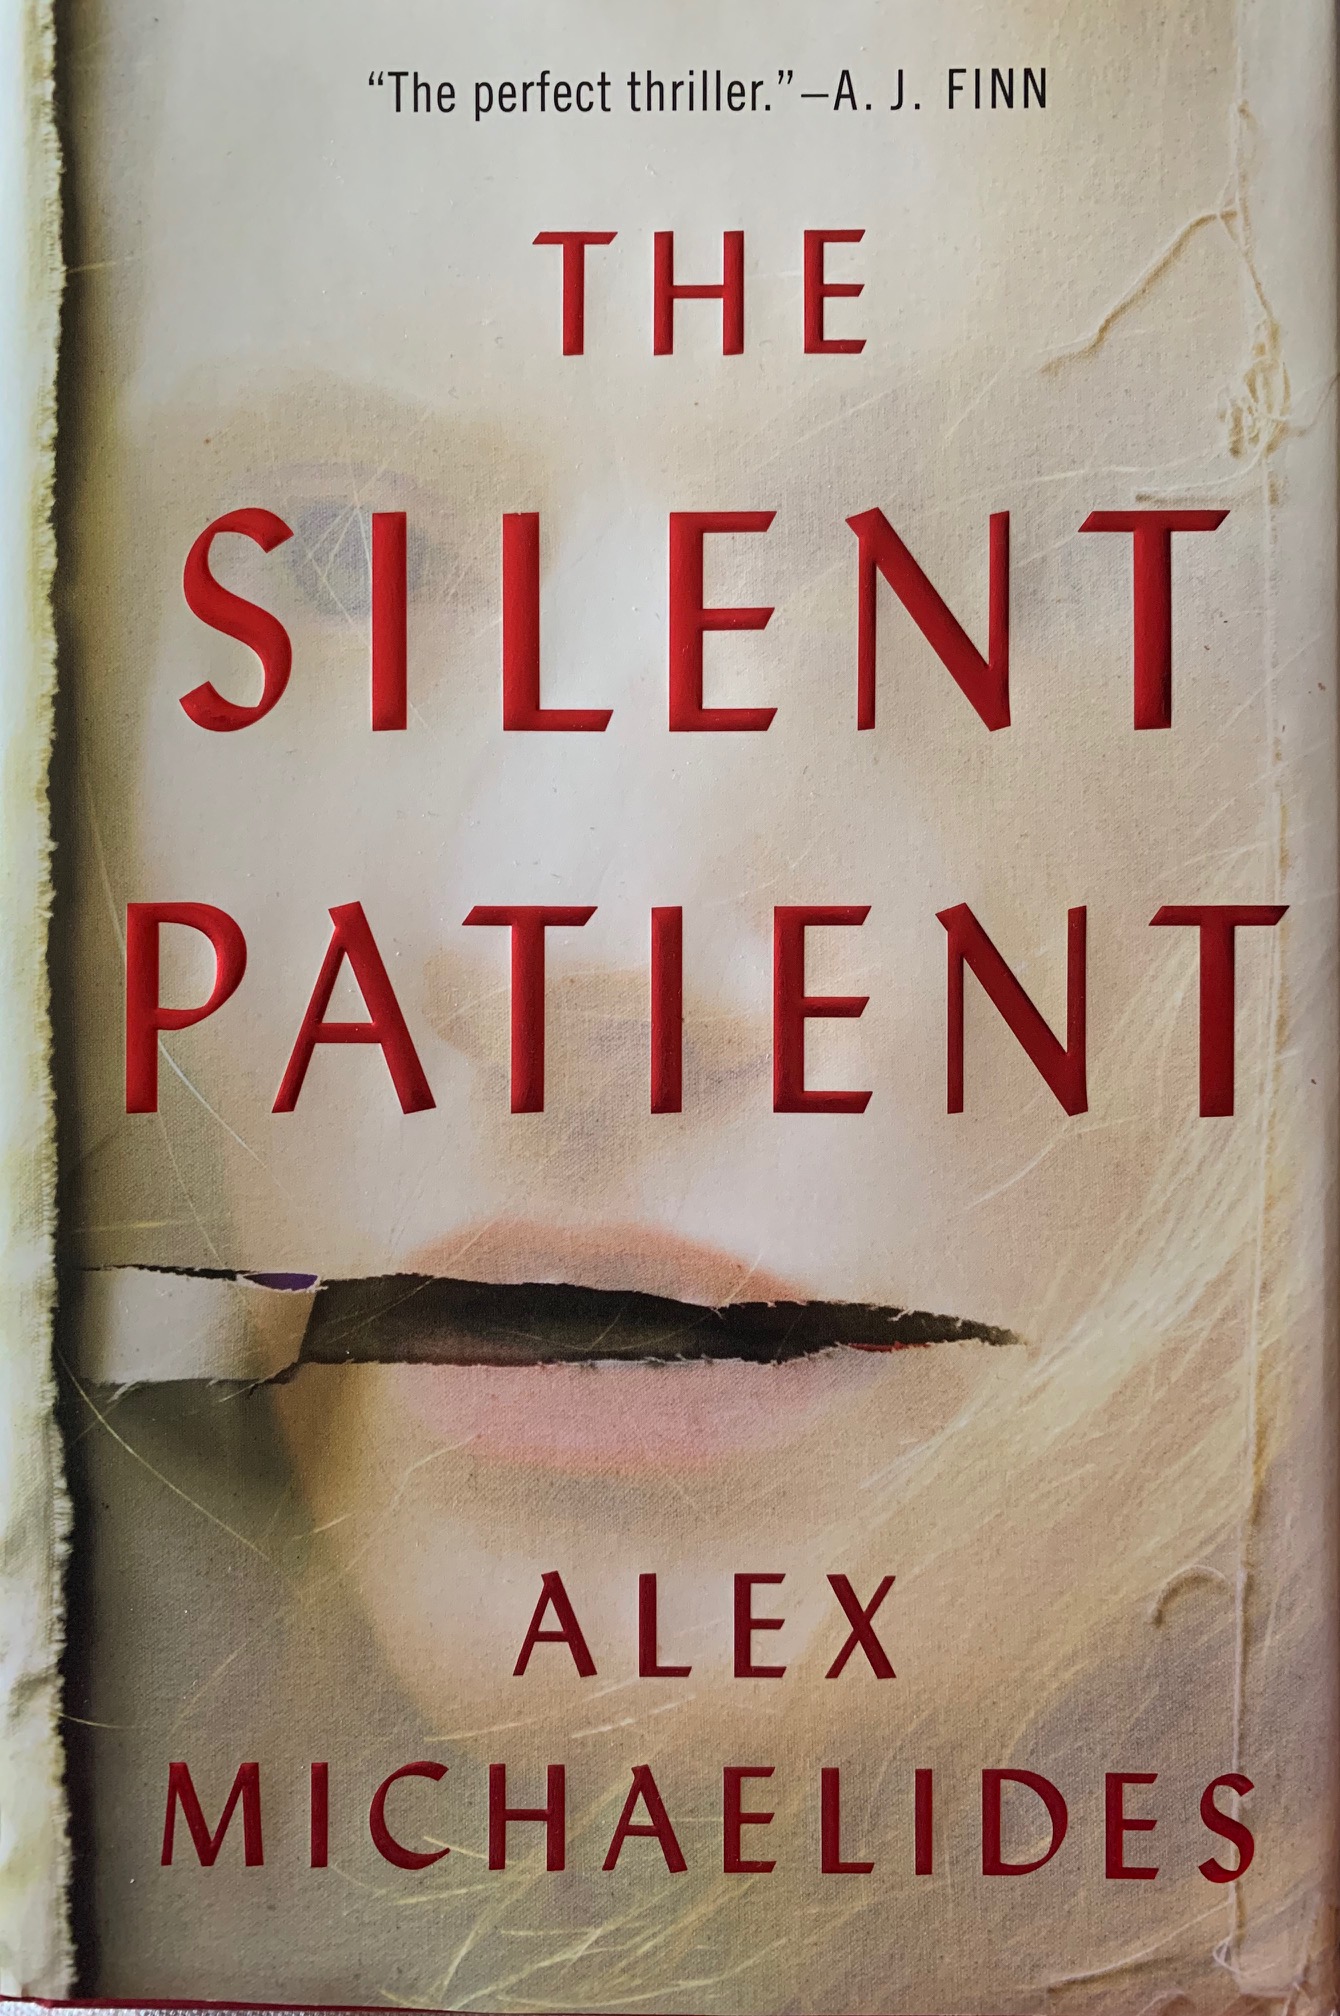 the silent patient movie on netflix